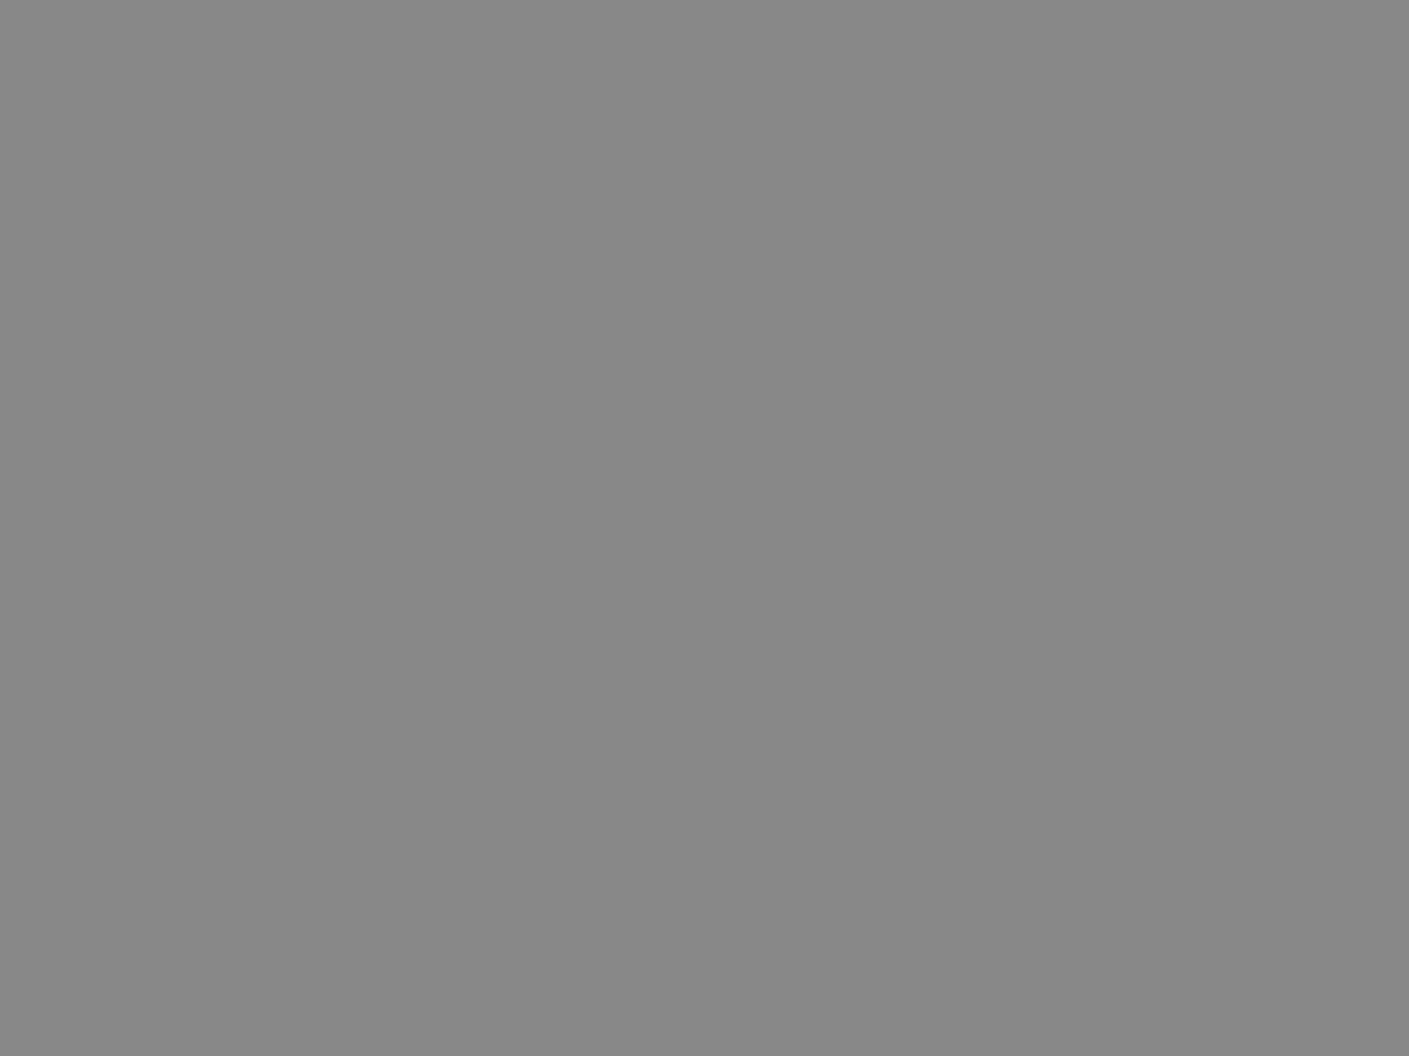 Петр Клодт. Одна из 4-х скульптур «Укротители коней» на Аничковом мосту, Санкт-Петербург. Фотография: Kora27 / <a href="https://commons.wikimedia.org/w/index.php?curid=28696677" target="_blank" rel="noopener">commons.wikimedia</a> / <a href="https://creativecommons.org/licenses/by-sa/3.0" target="_blank" rel="noopener">CC BY-SA 3.0</a>